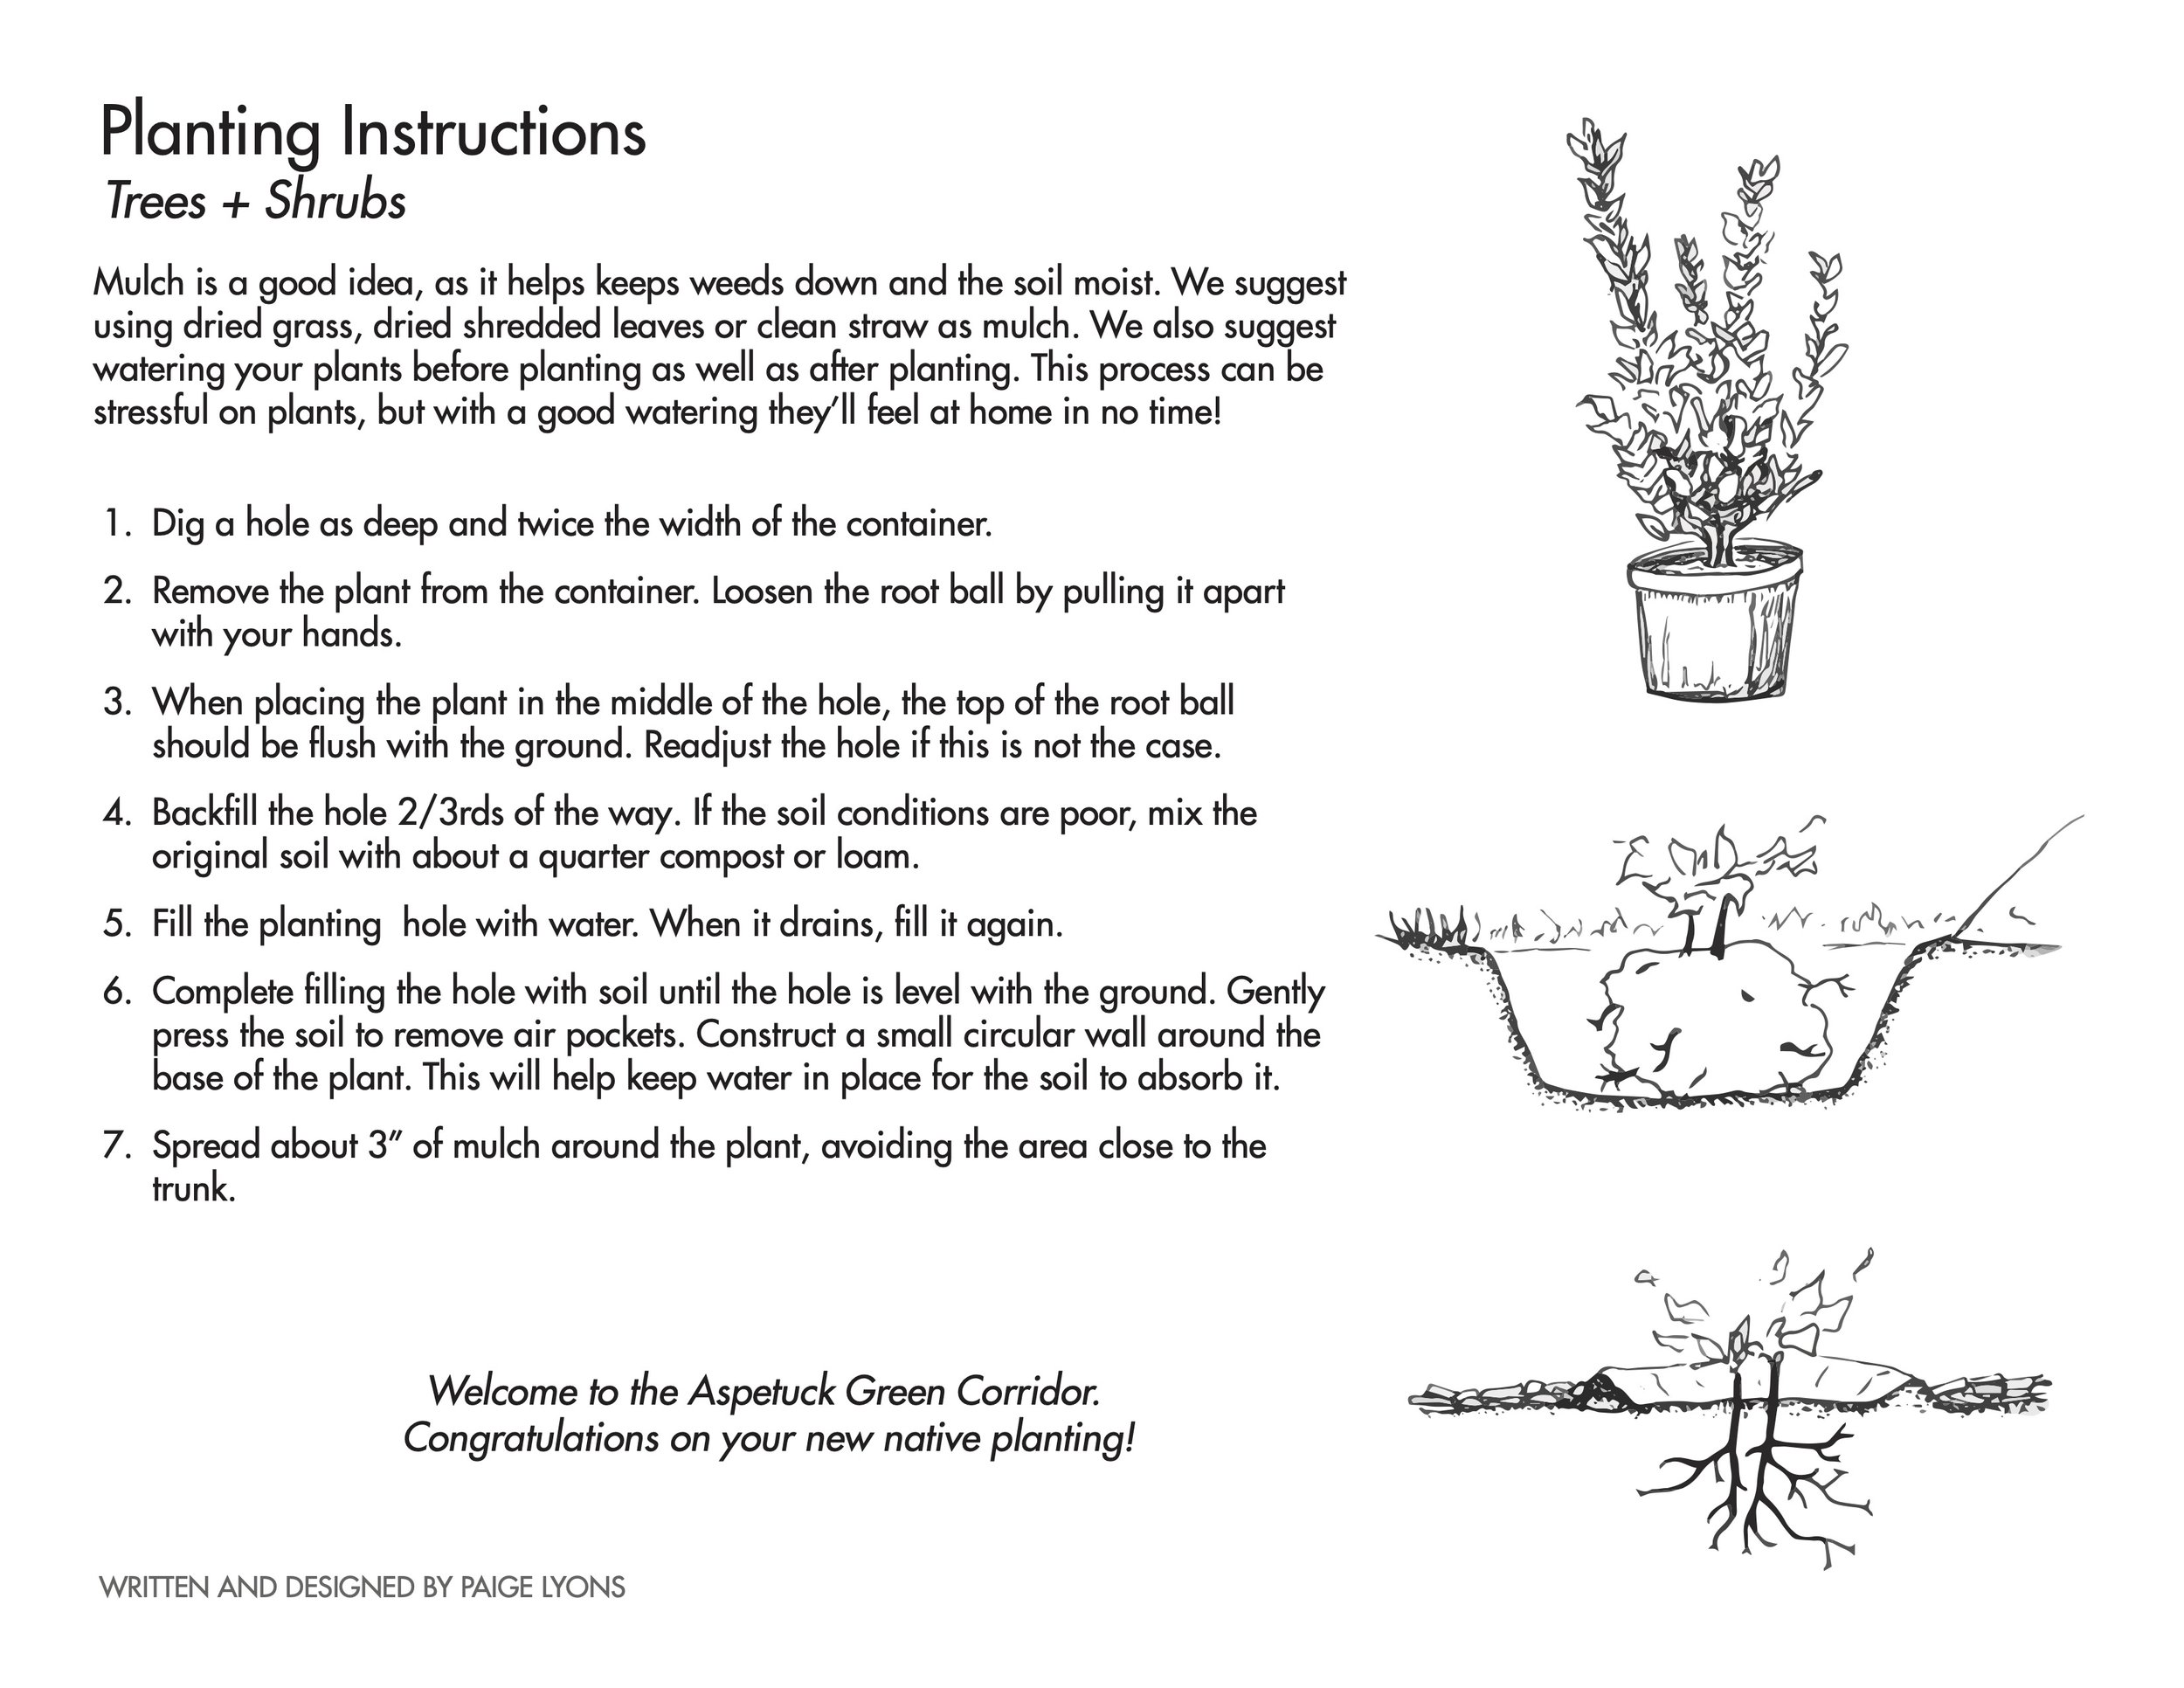 Tree and Shrub Planting Instructions